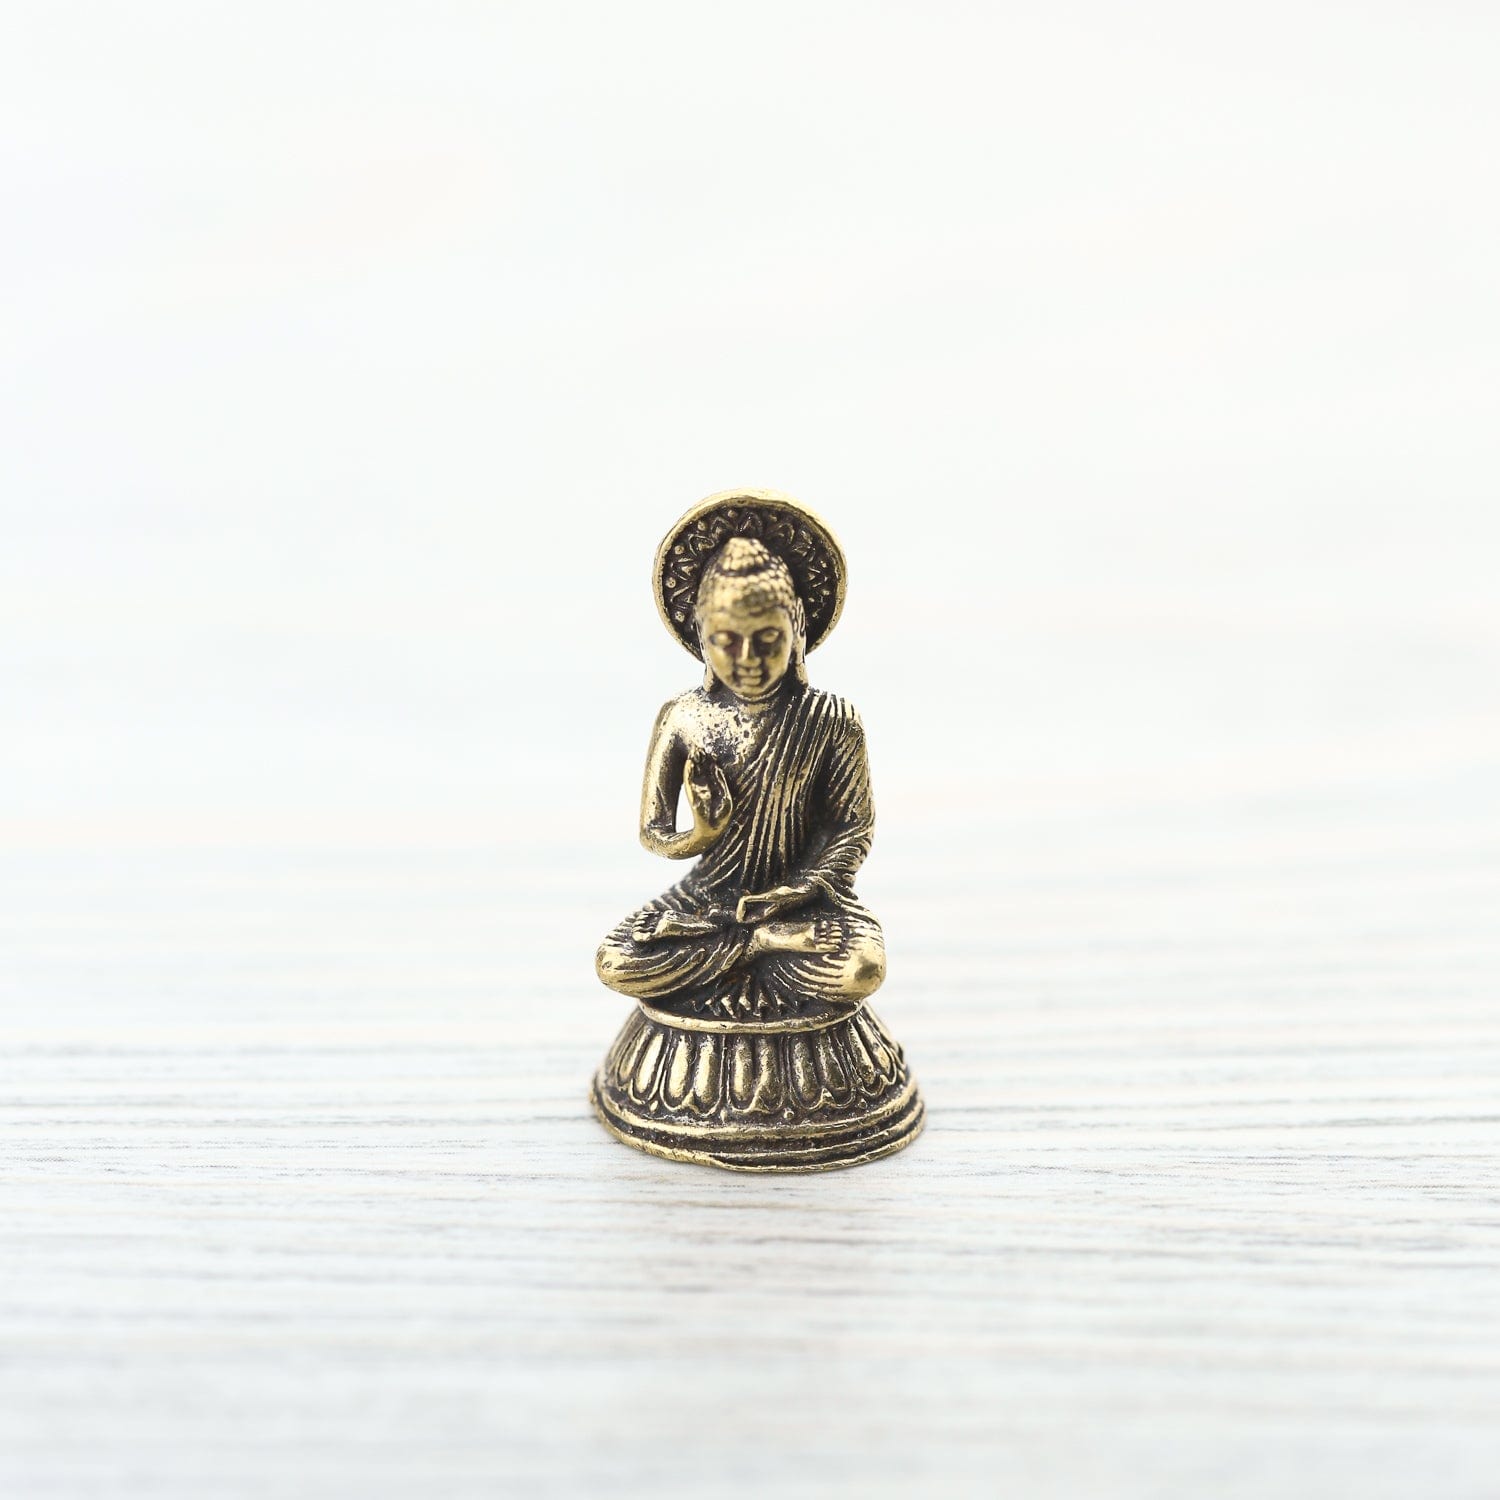 Amazon.com: Ornerx Thai Sitting Buddha Statue for Home Decor Ivory 6.7 